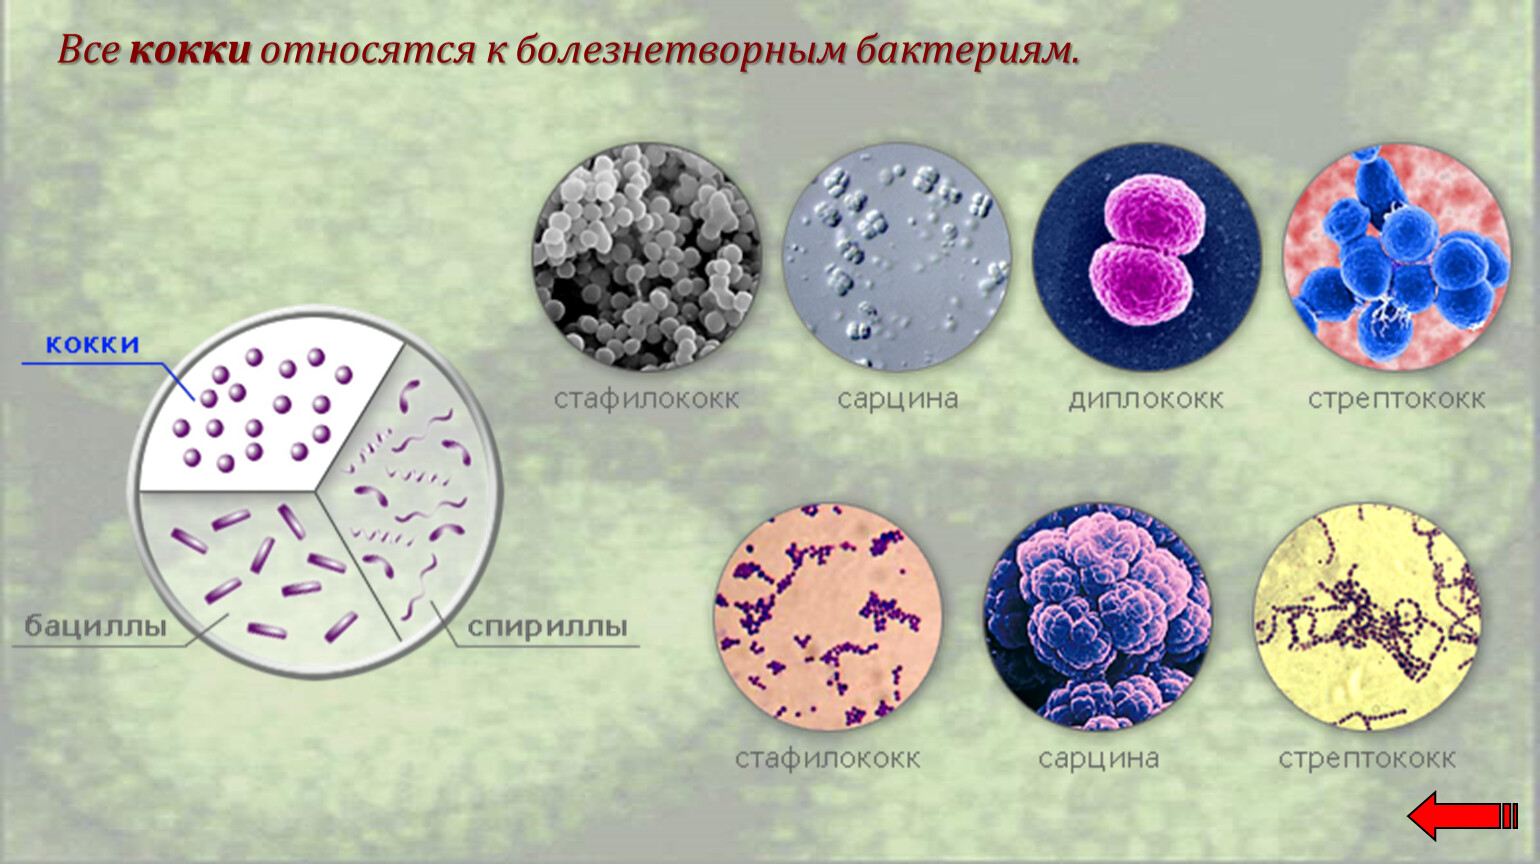 Кокковые бактерии. Кокки диплококки бациллы. Кокковидные бактерии. Шарообразные кокки.  Кокковидные бактерии (кокки).